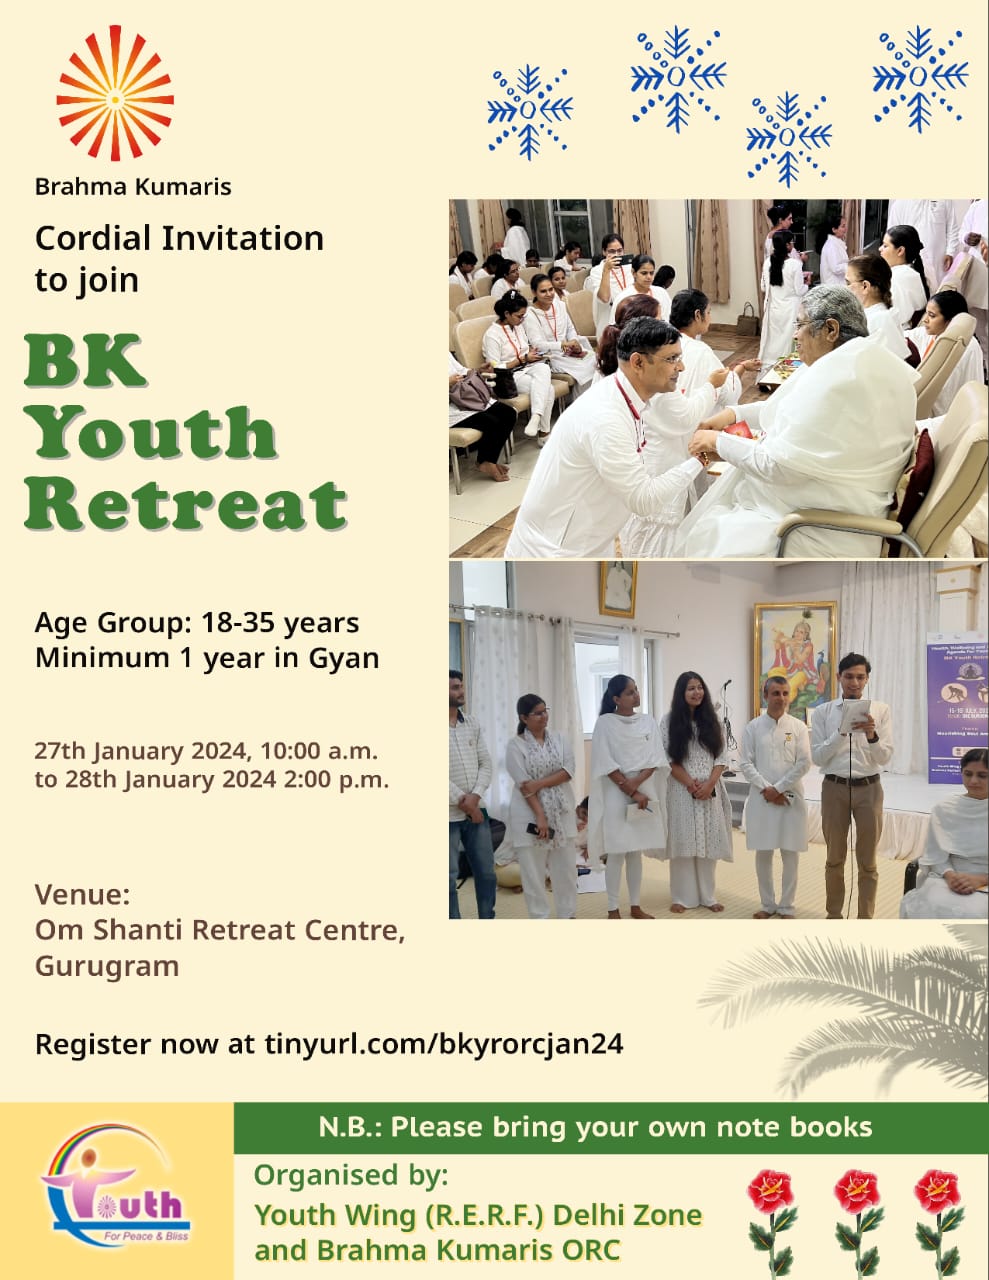 Bk youth retreat